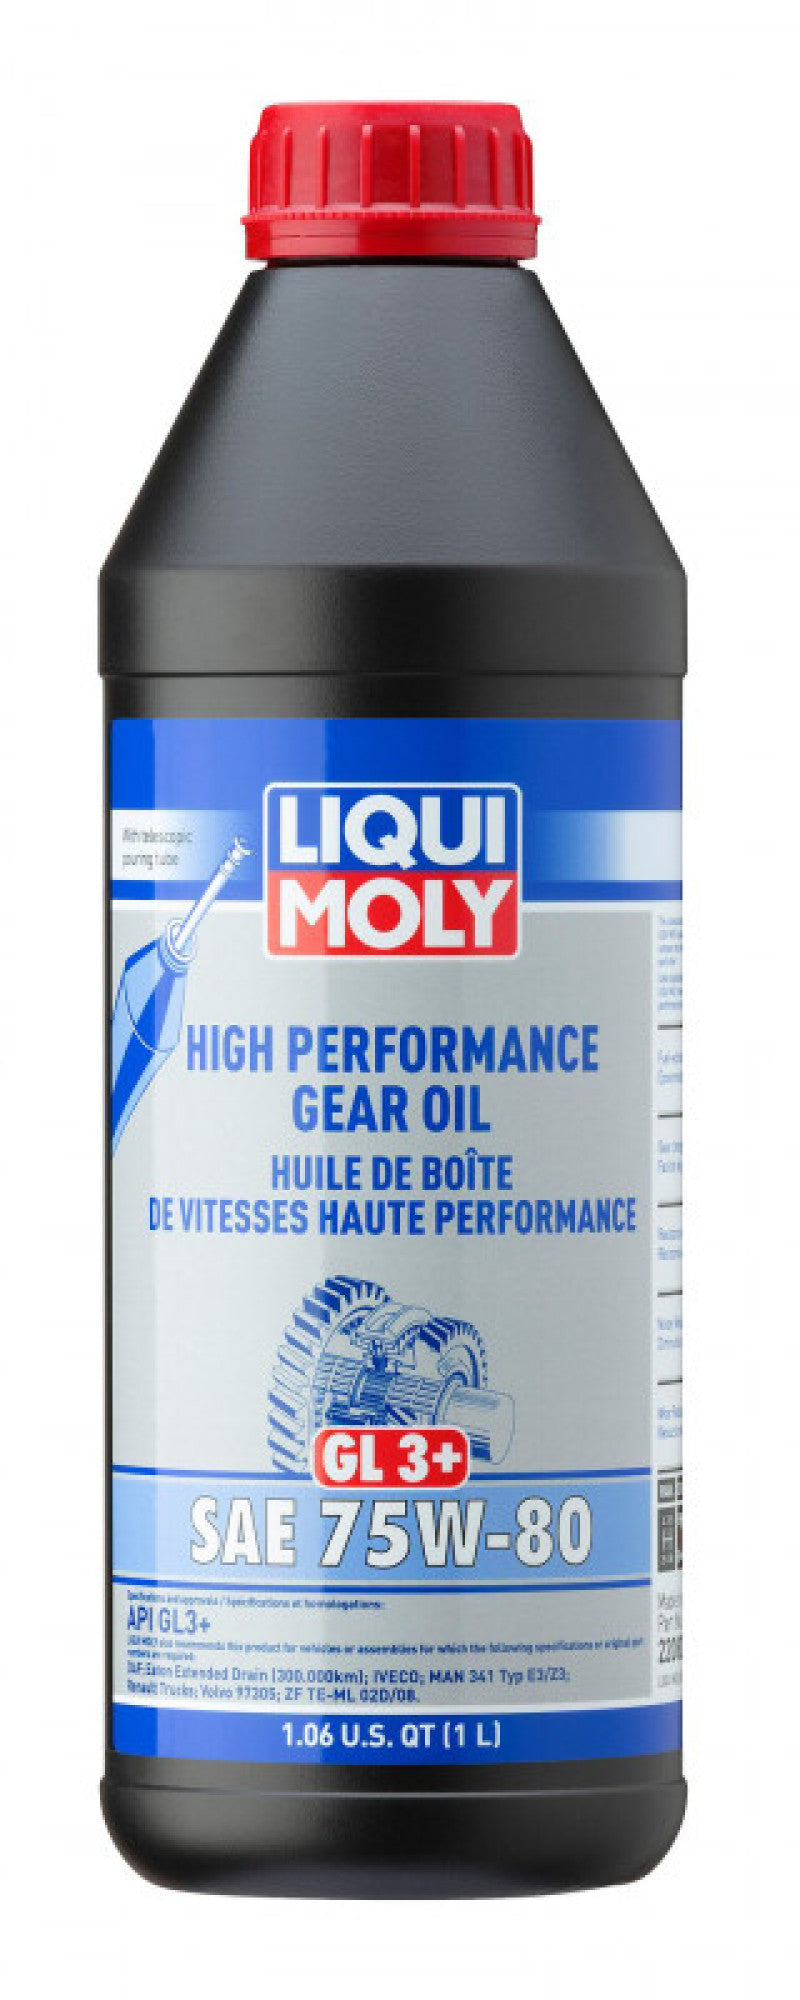 LIQUI MOLY 1L High Performance Gear Oil (GL3+) SAE 75W80.